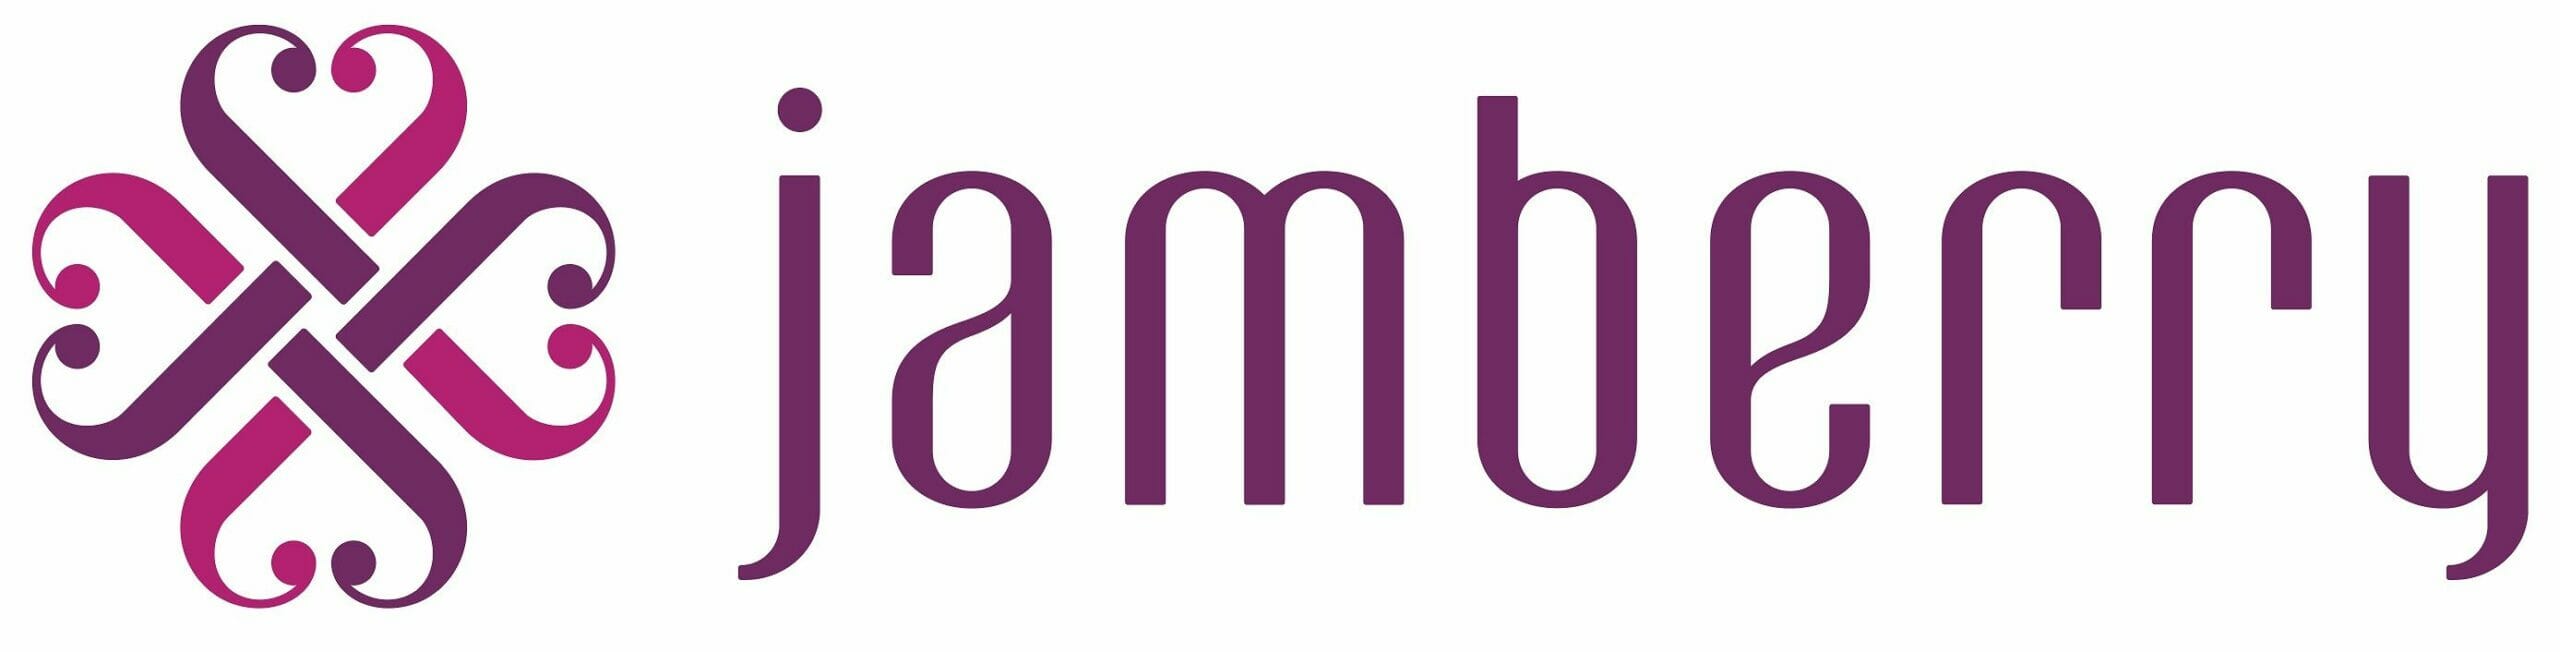 jamberry nails logo